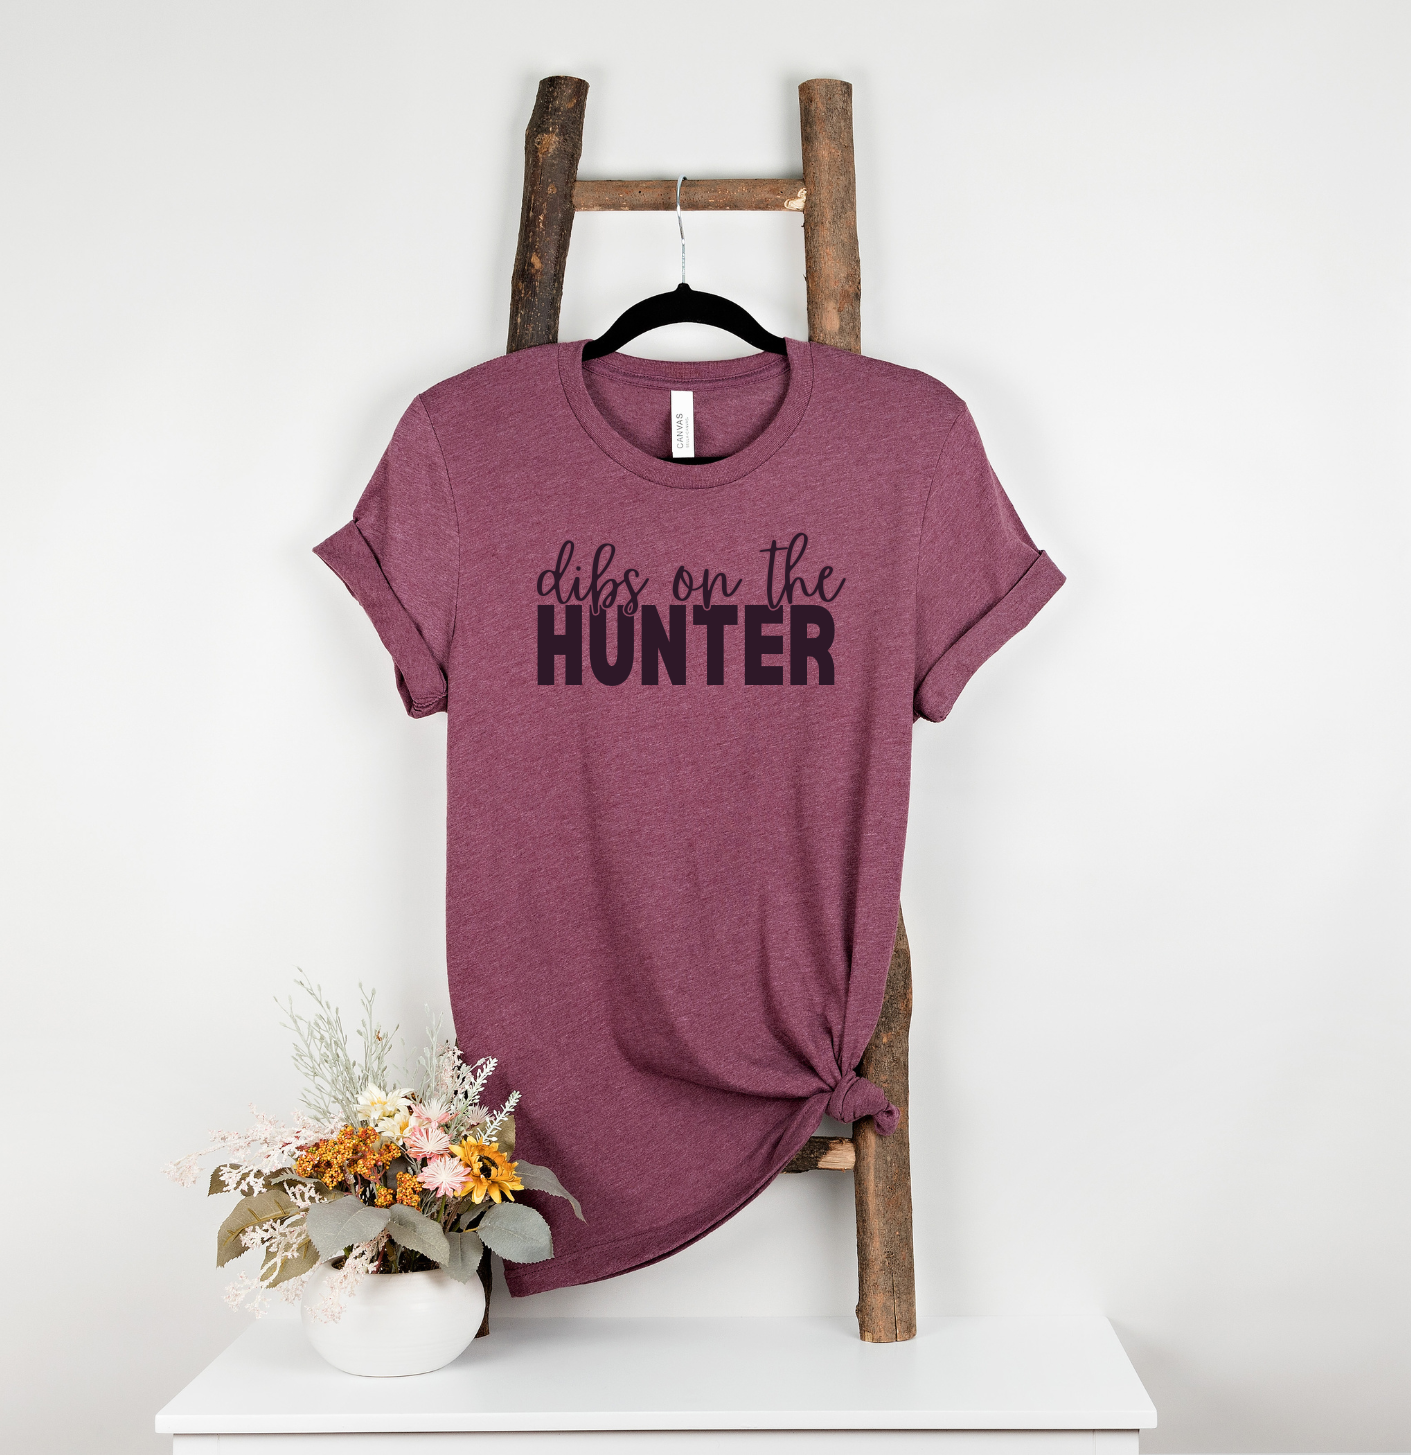 Dibs on the Hunter - Hunting Shirt